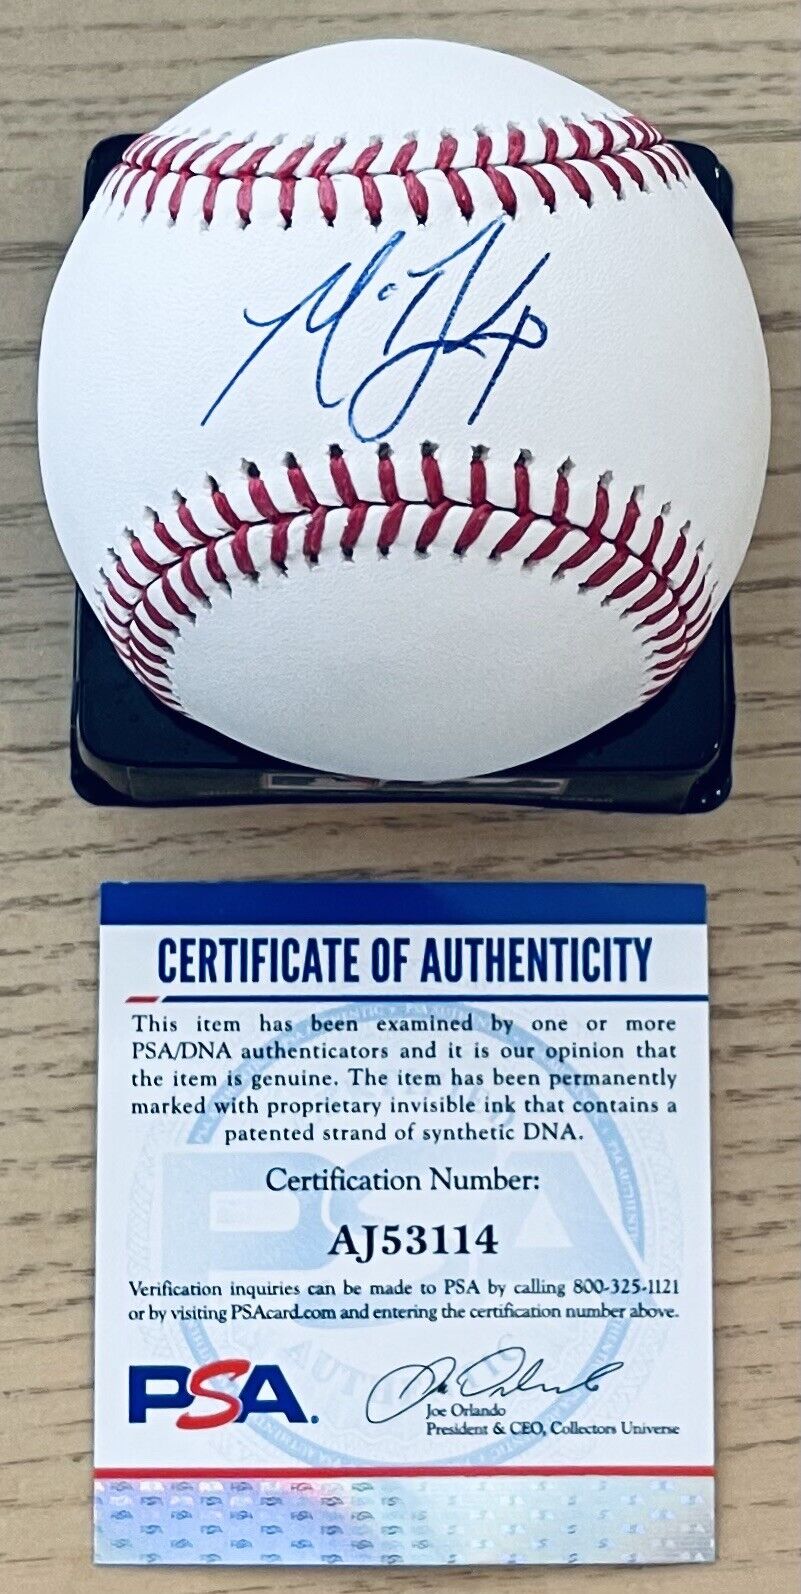 MADISON BUMGARNER W/#40 LICENSED PSA/DNA AUTHENTICATED SIGNED NEW MLB BASEBALL